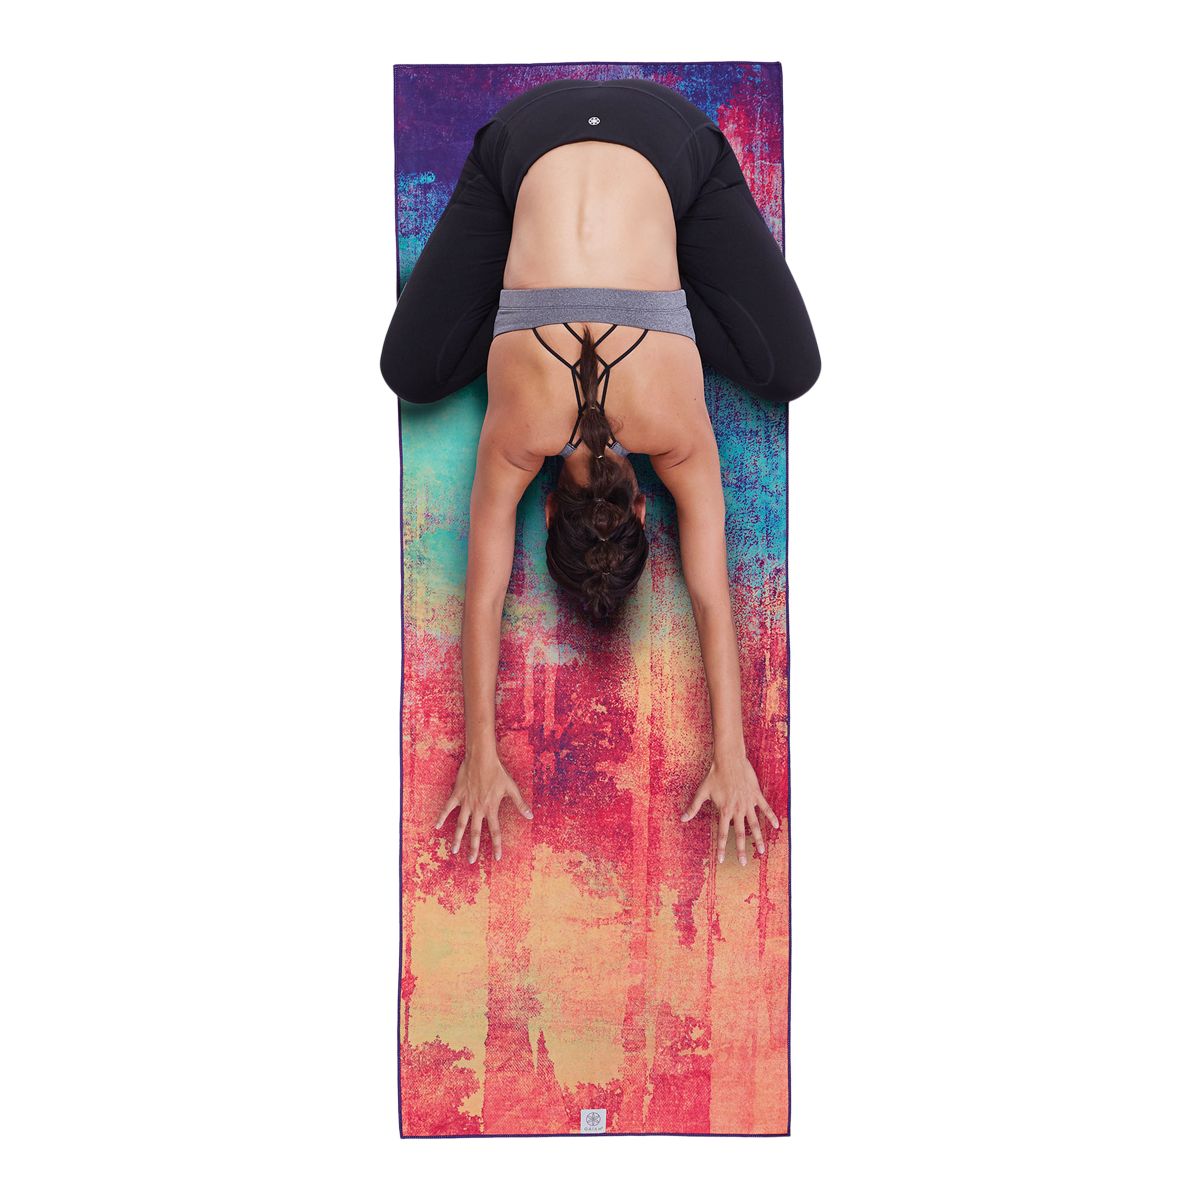 Hot Yoga Accessories - Mats, Blocks, Straps, & Towels Tagged Material-  Latex Free - Gaiam